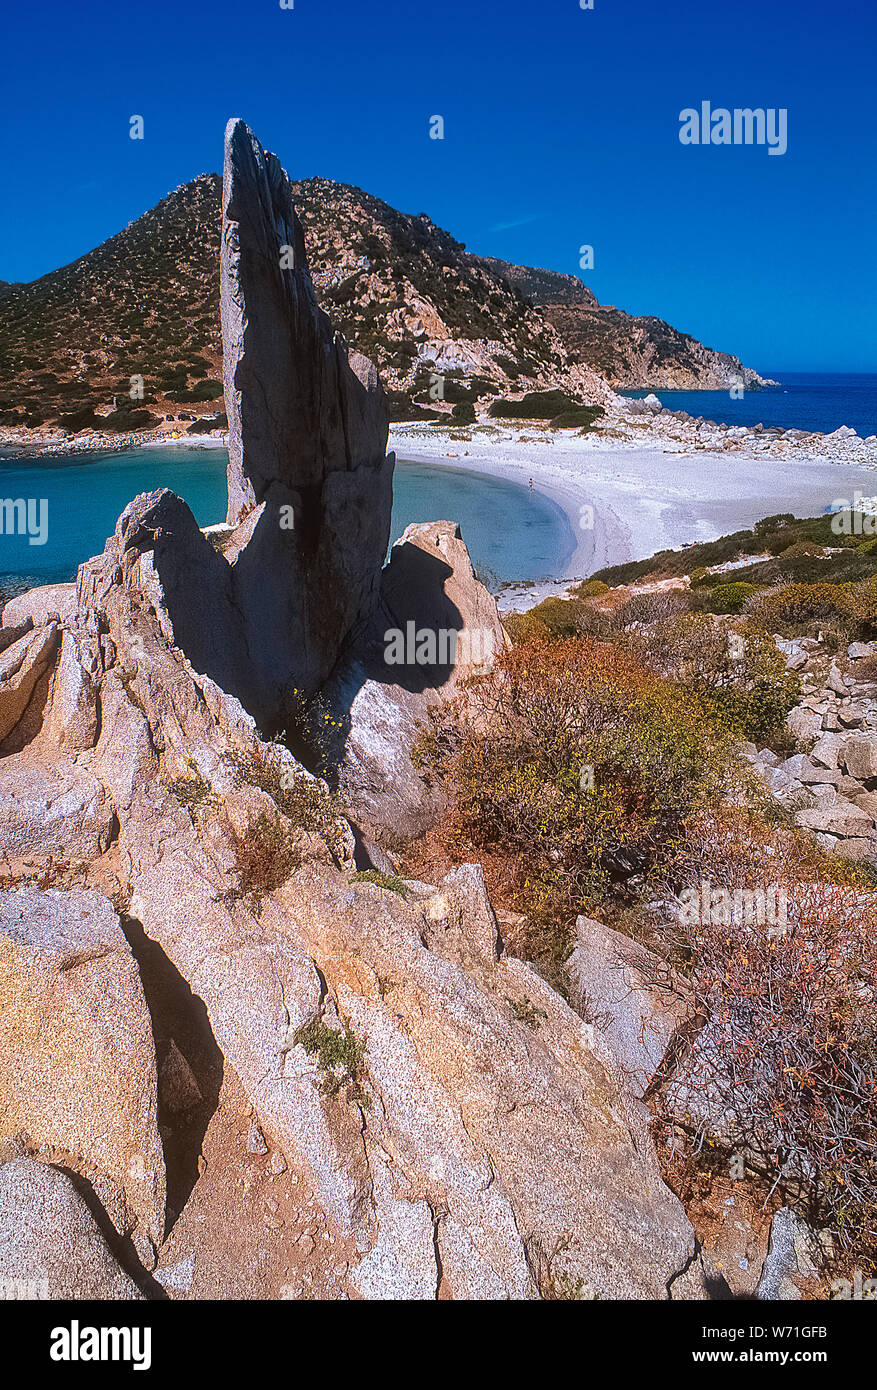 Italy Sardinia Protected area of Capo Carbonara - Villasimius Molentis Beach Stock Photo